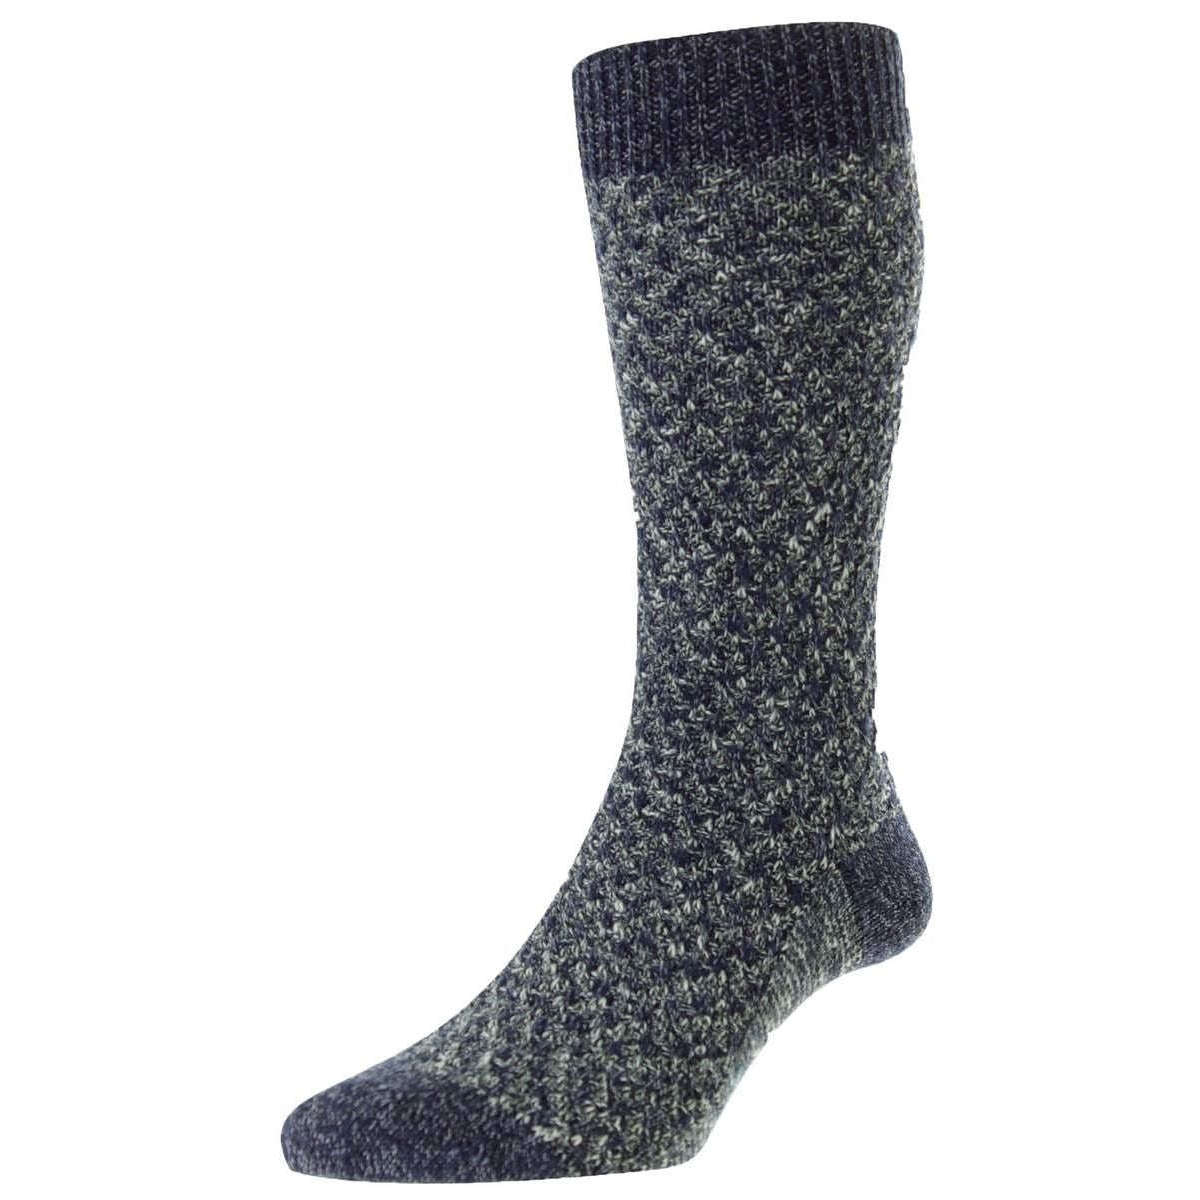 Pantherella Rhos Eco Texture Socks - Black Sea Mix